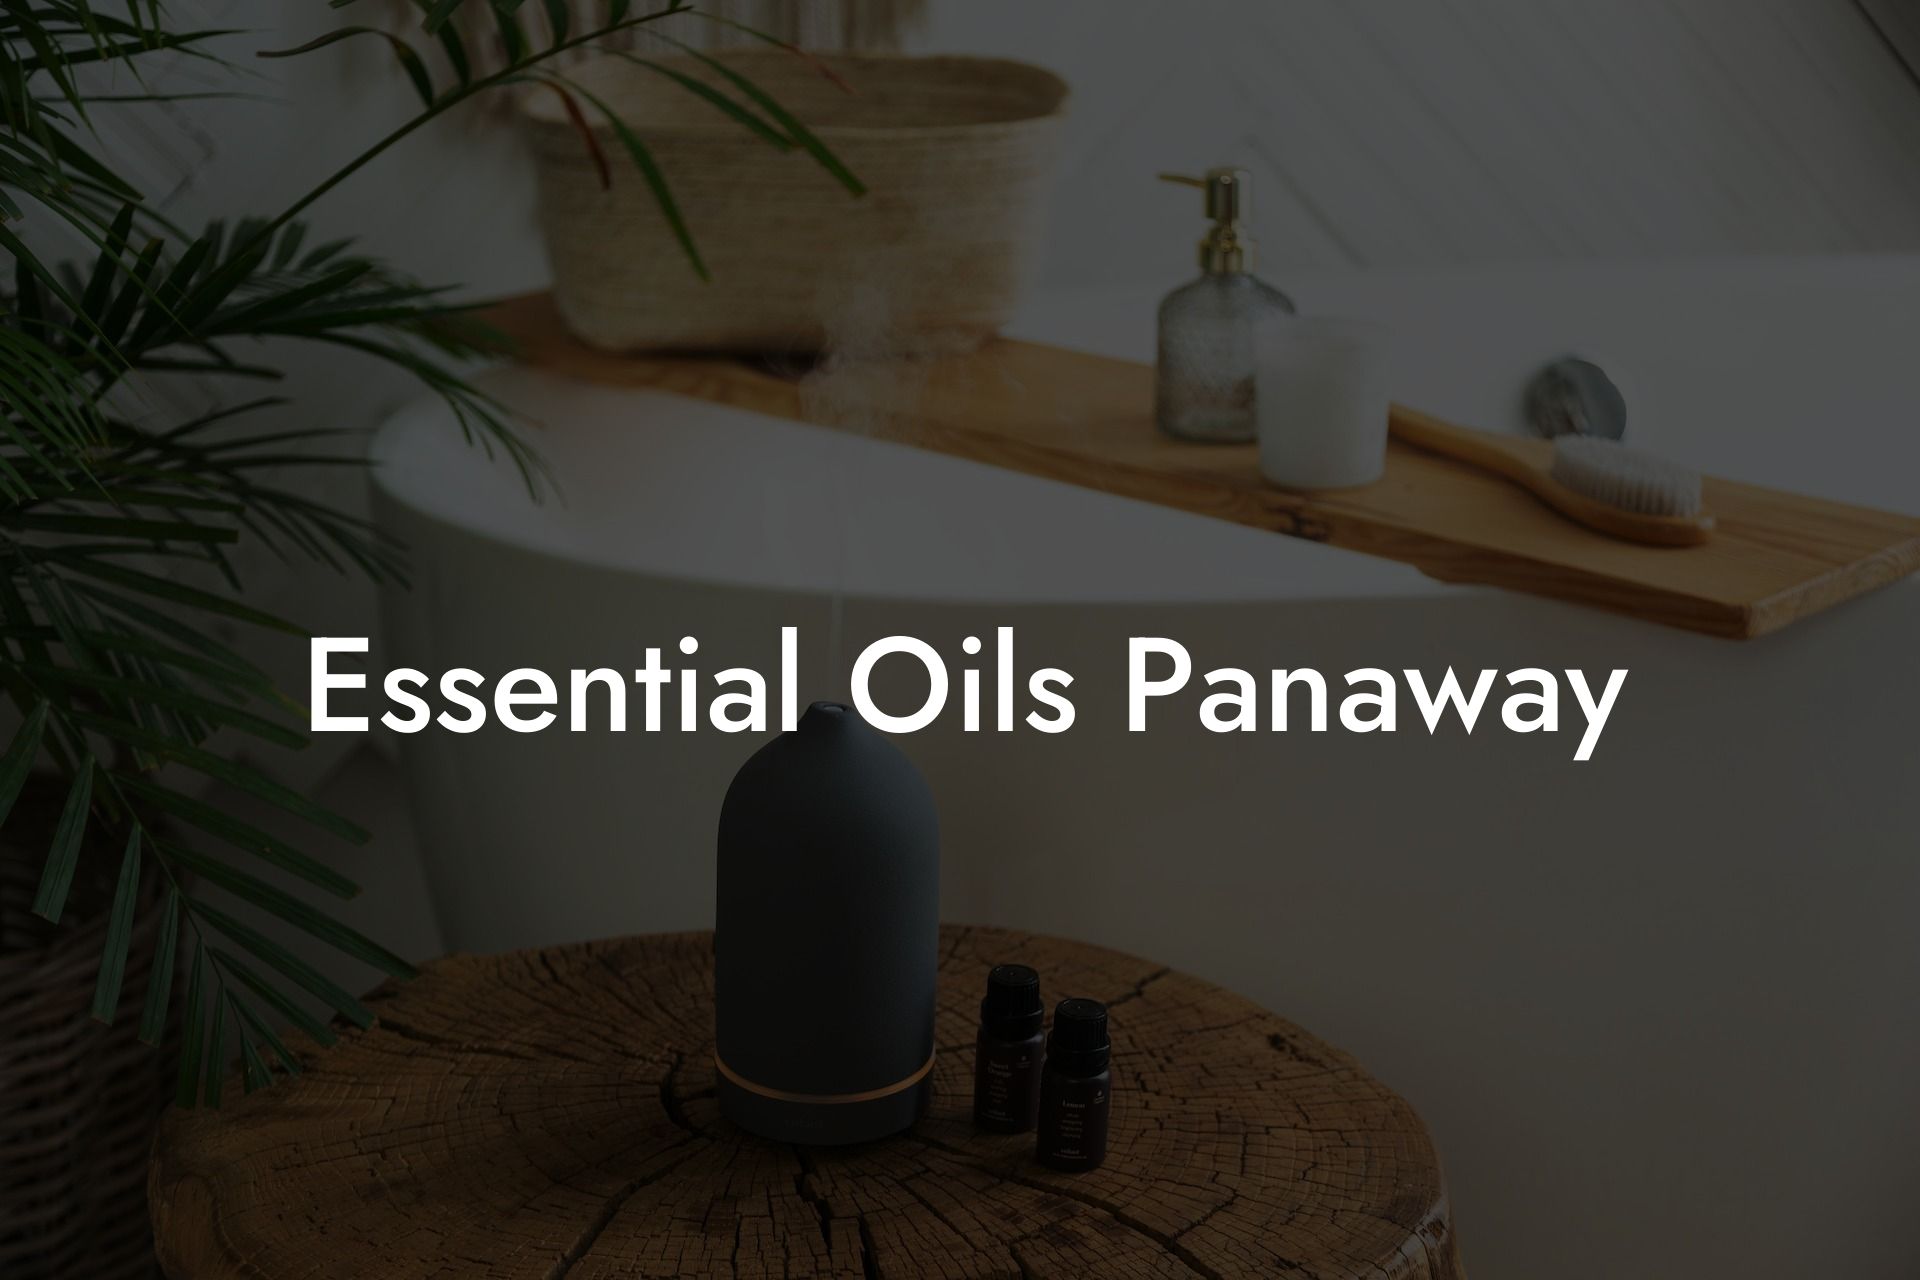 Essential Oils Panaway